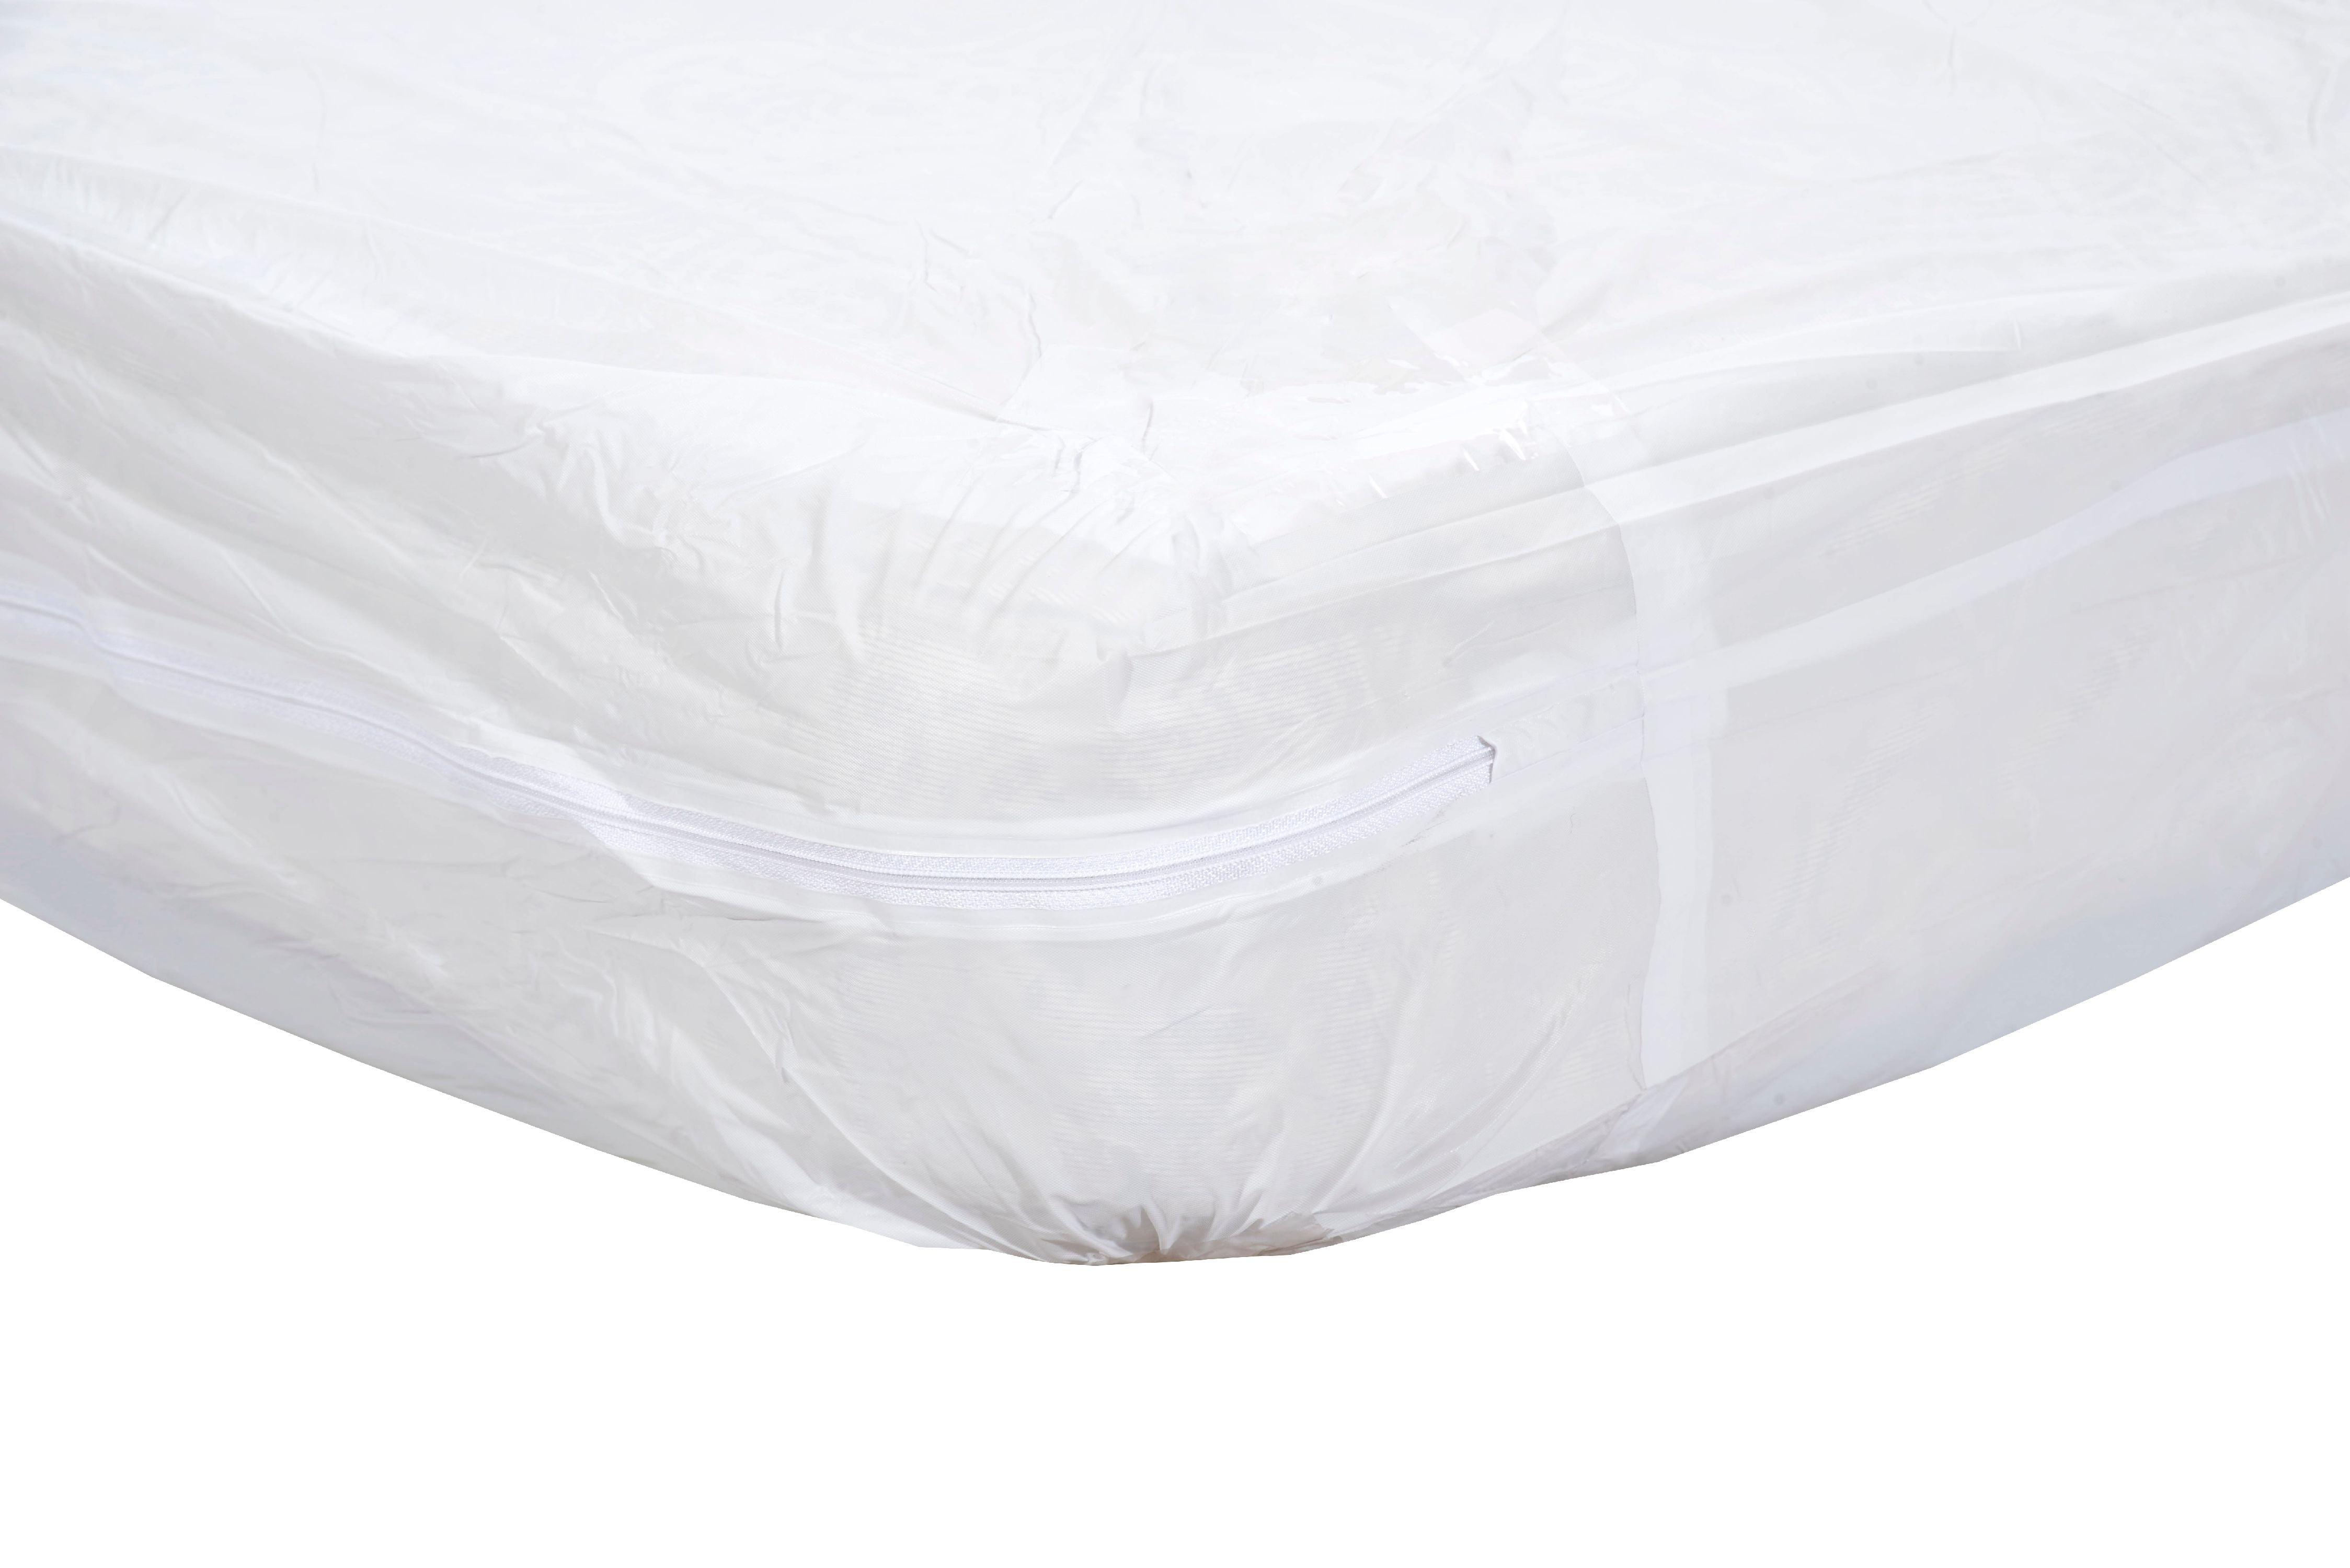 vinyl zippered white mattress cover